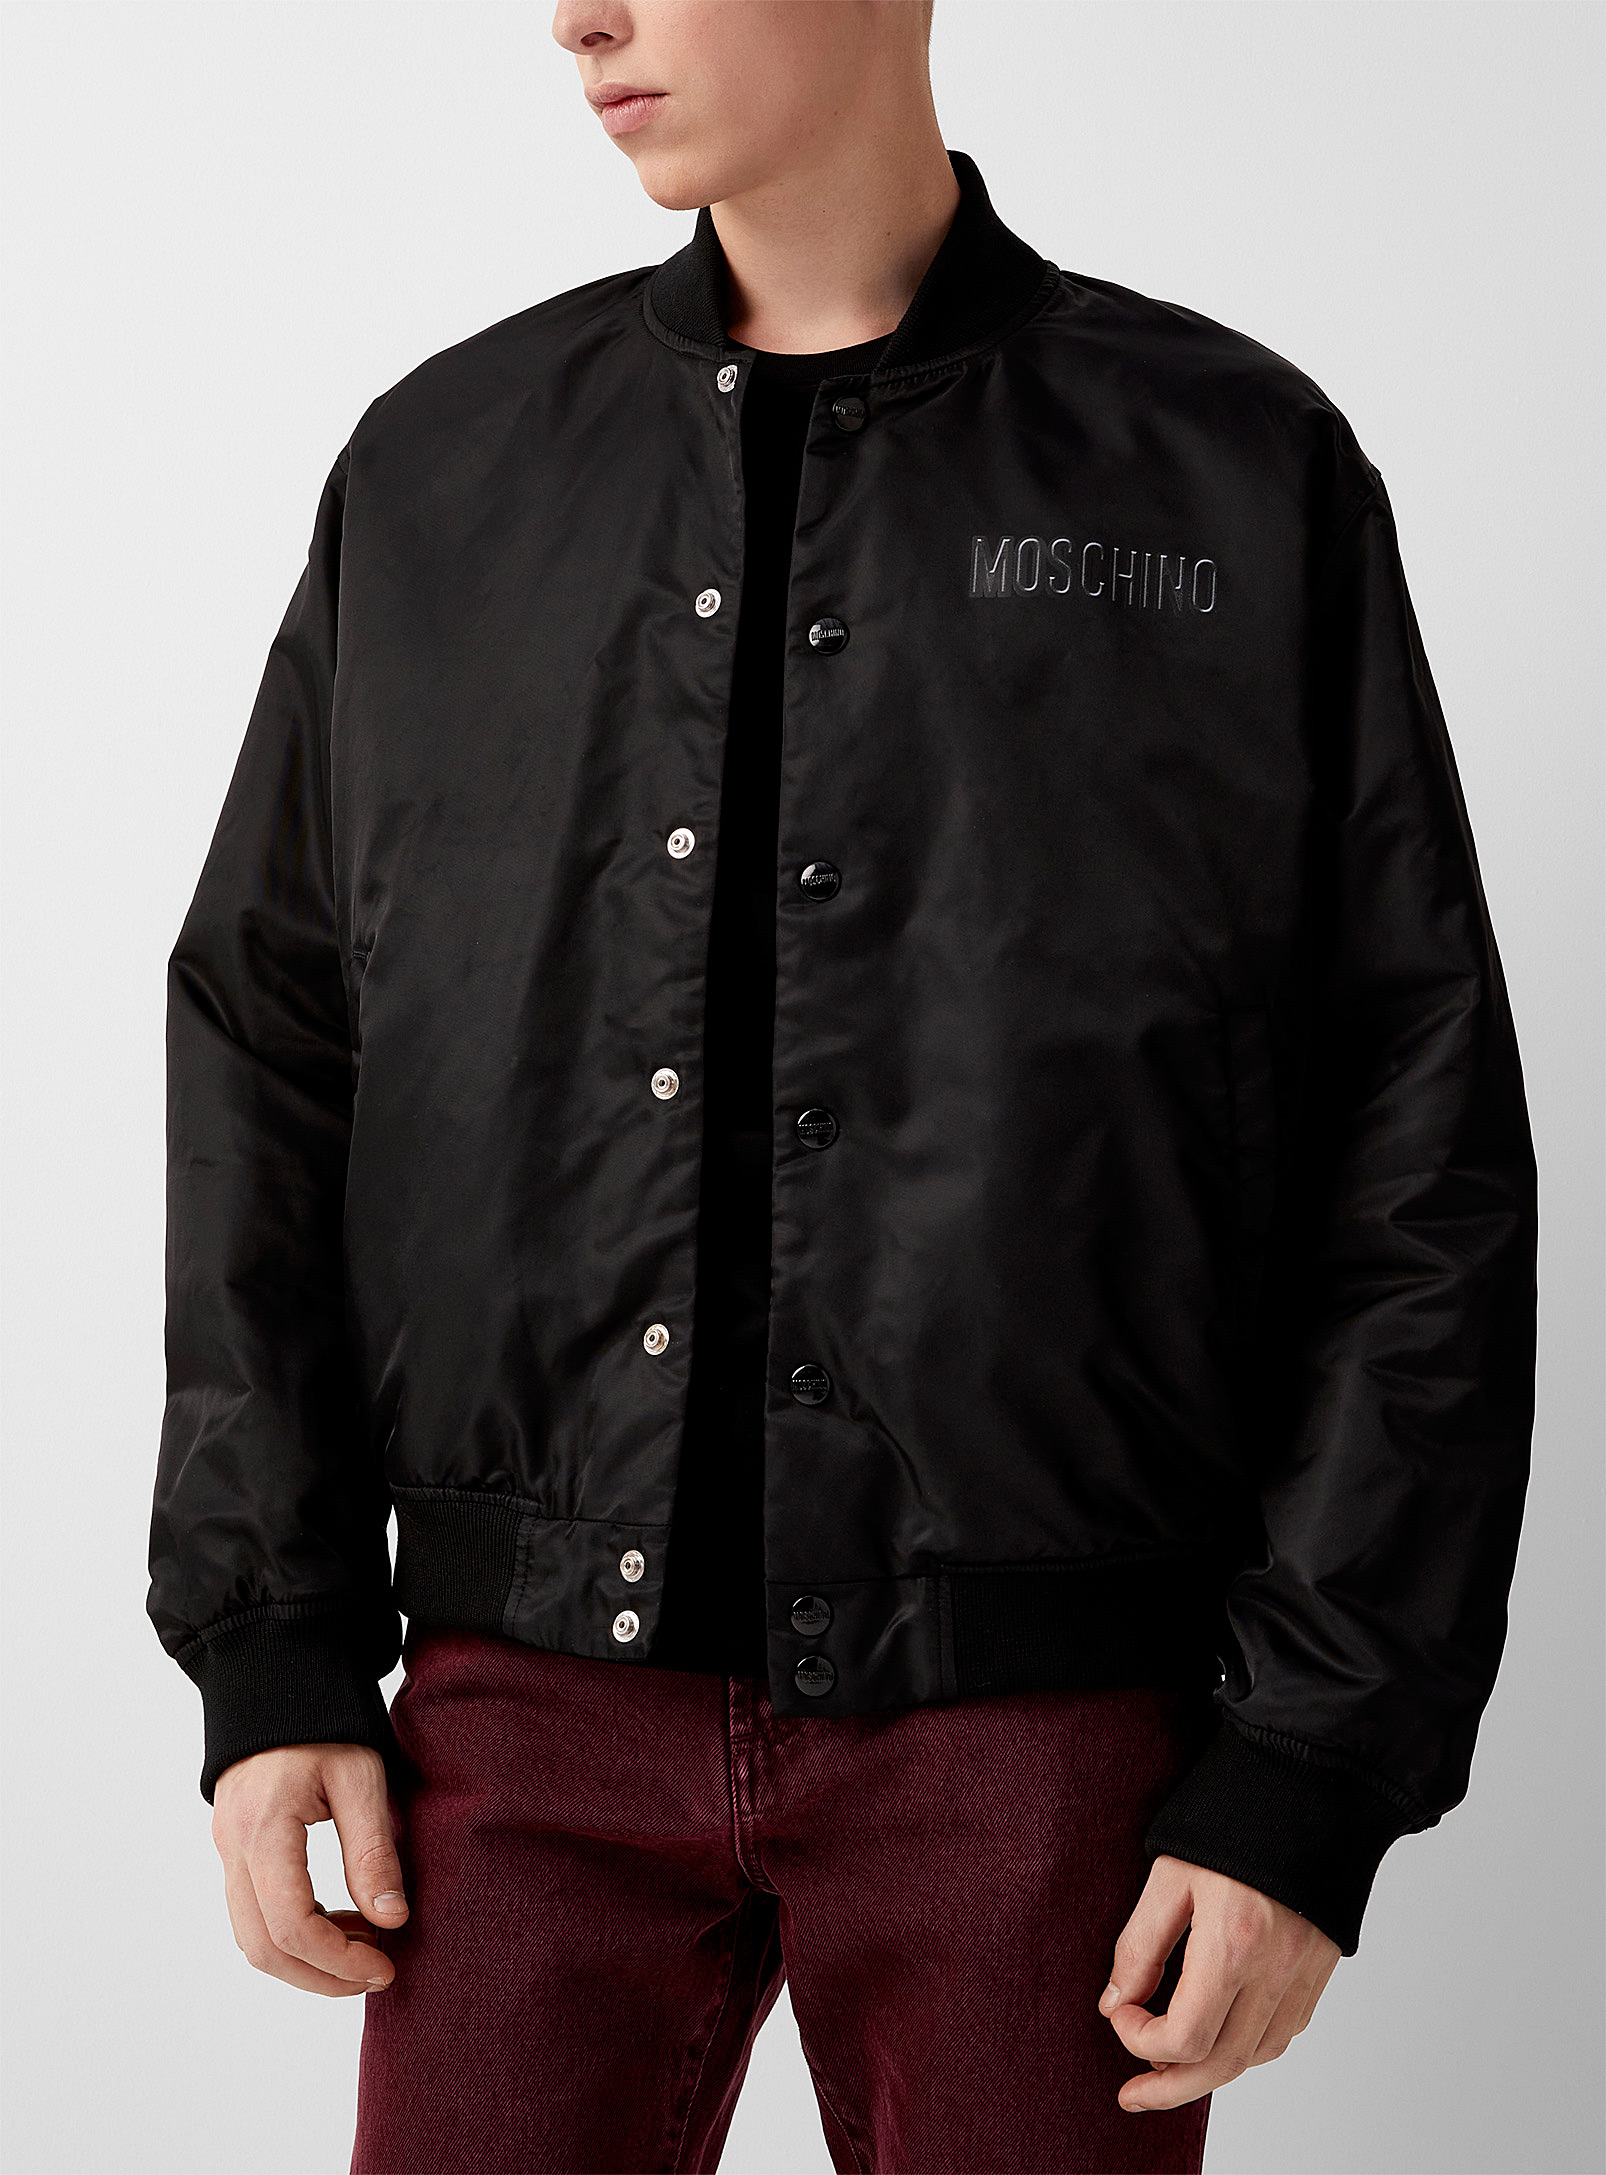 Moschino - Men's Teddy print black bomber jacket